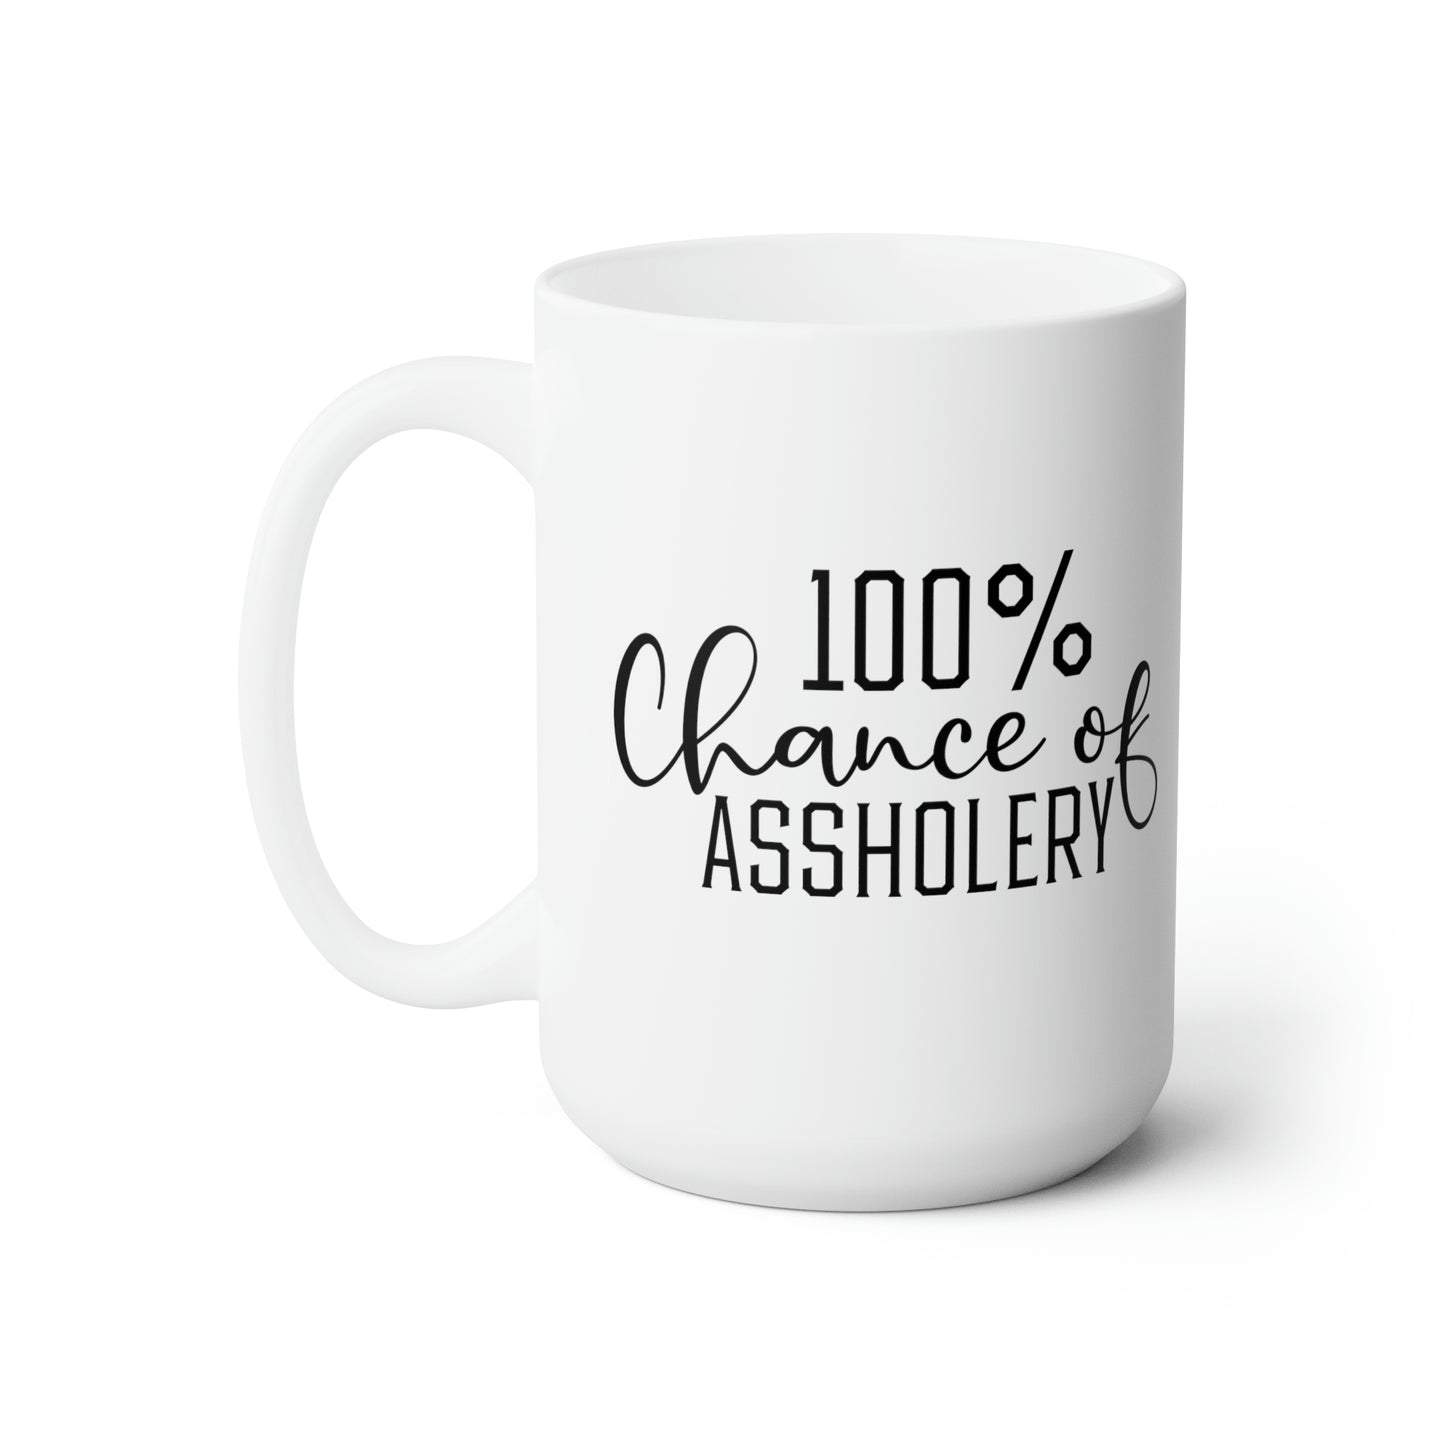 100% Chance of Assholery - Funny Coffee Mug